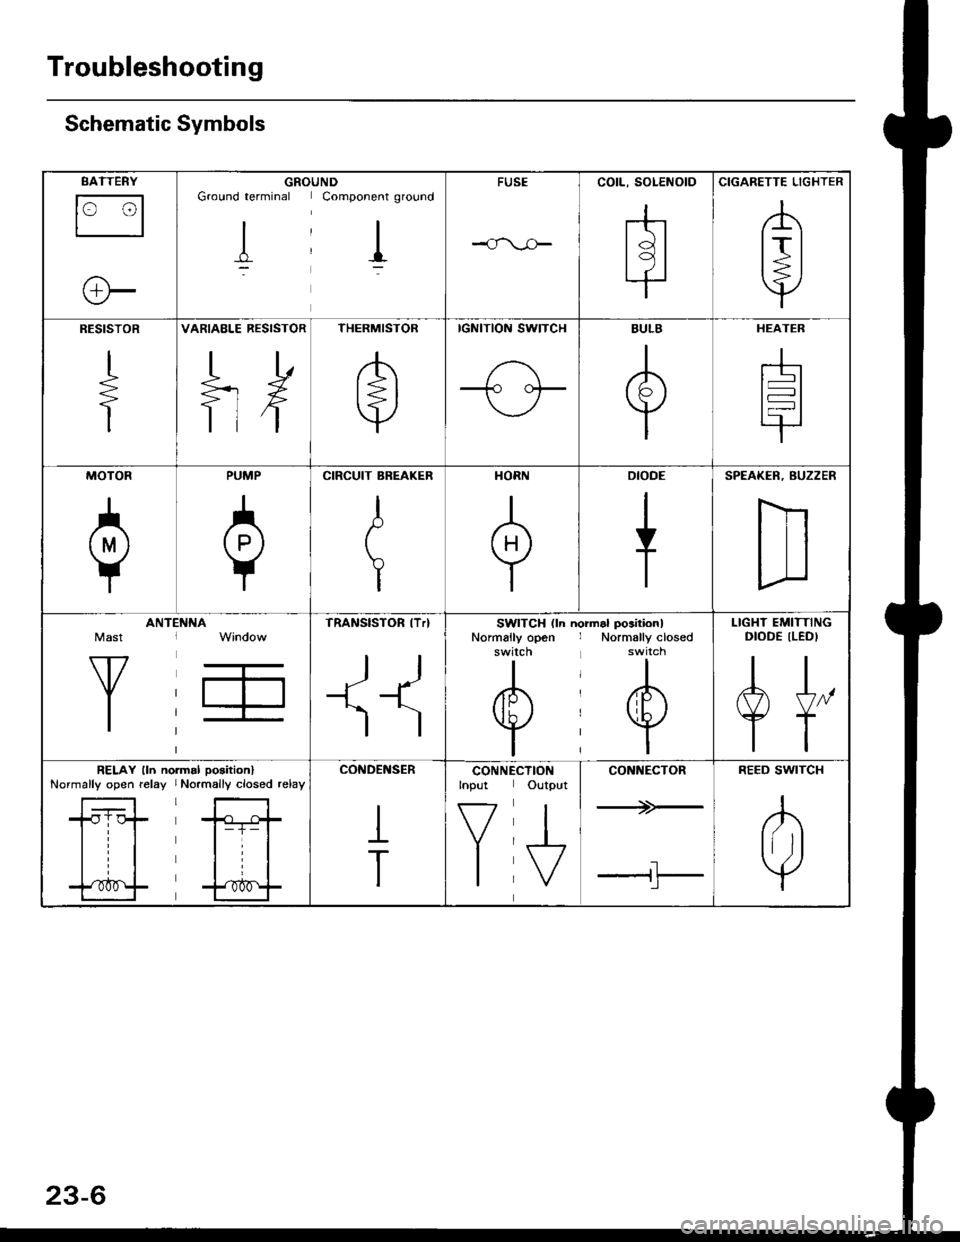 HONDA CIVIC 1996 6.G Workshop Manual Troubleshooting
Schematic Symbols
BATTERY
E
@
GROGroLrnd terminal
II_d:
UNDComponent ground
II_..-
FUSE
--cn-.e
COIL, SOLENOID
r{r
tql|
CIGARETTE LIGHTER
A
lrl
P
RESISTOR
I
f
VARIAELE RESISTOR
ilH
T